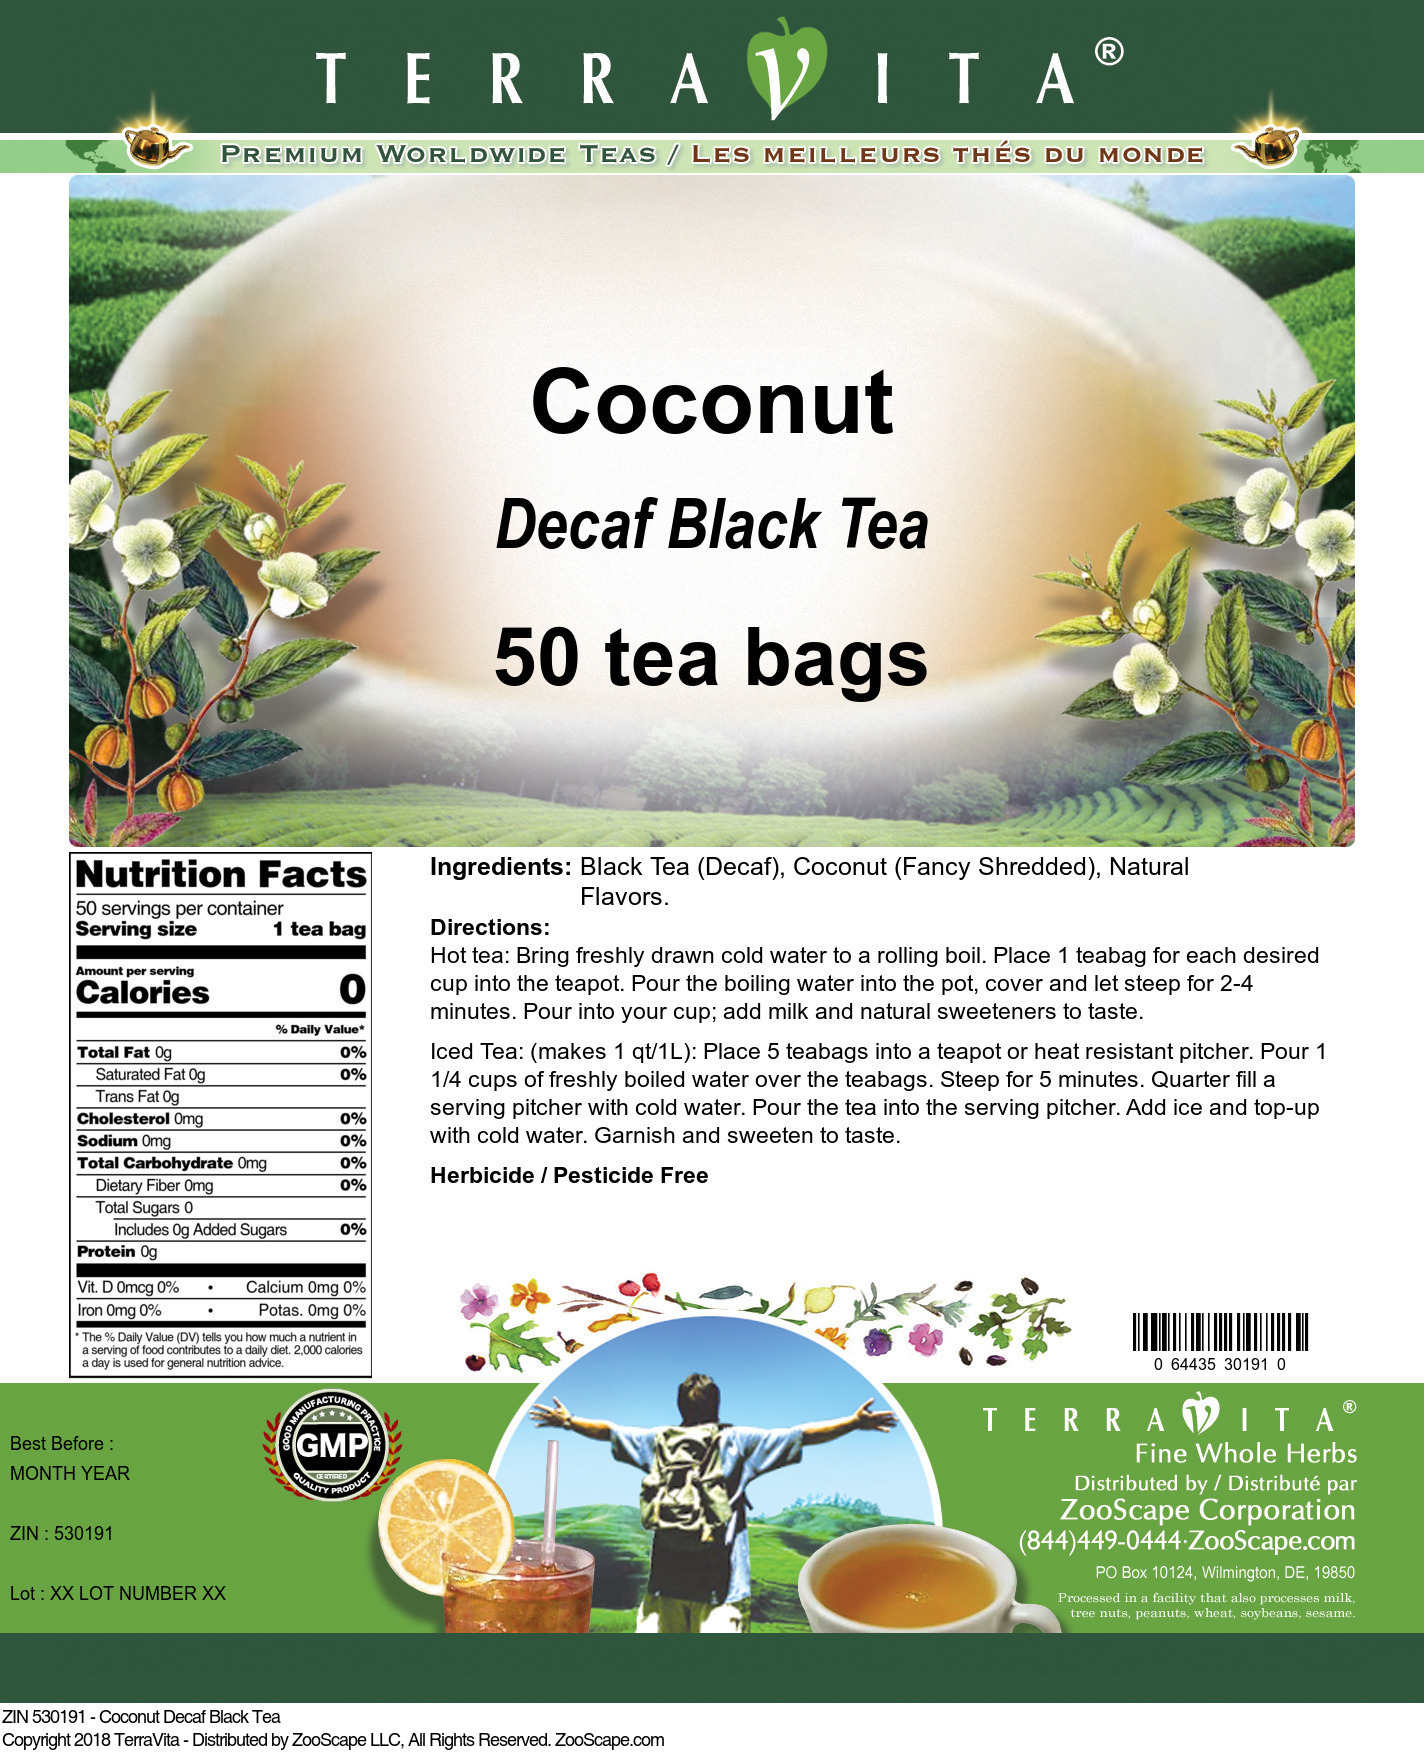 TerraVita Coconut Decaf Black Tea (50 tea bags, ZIN: 530191)